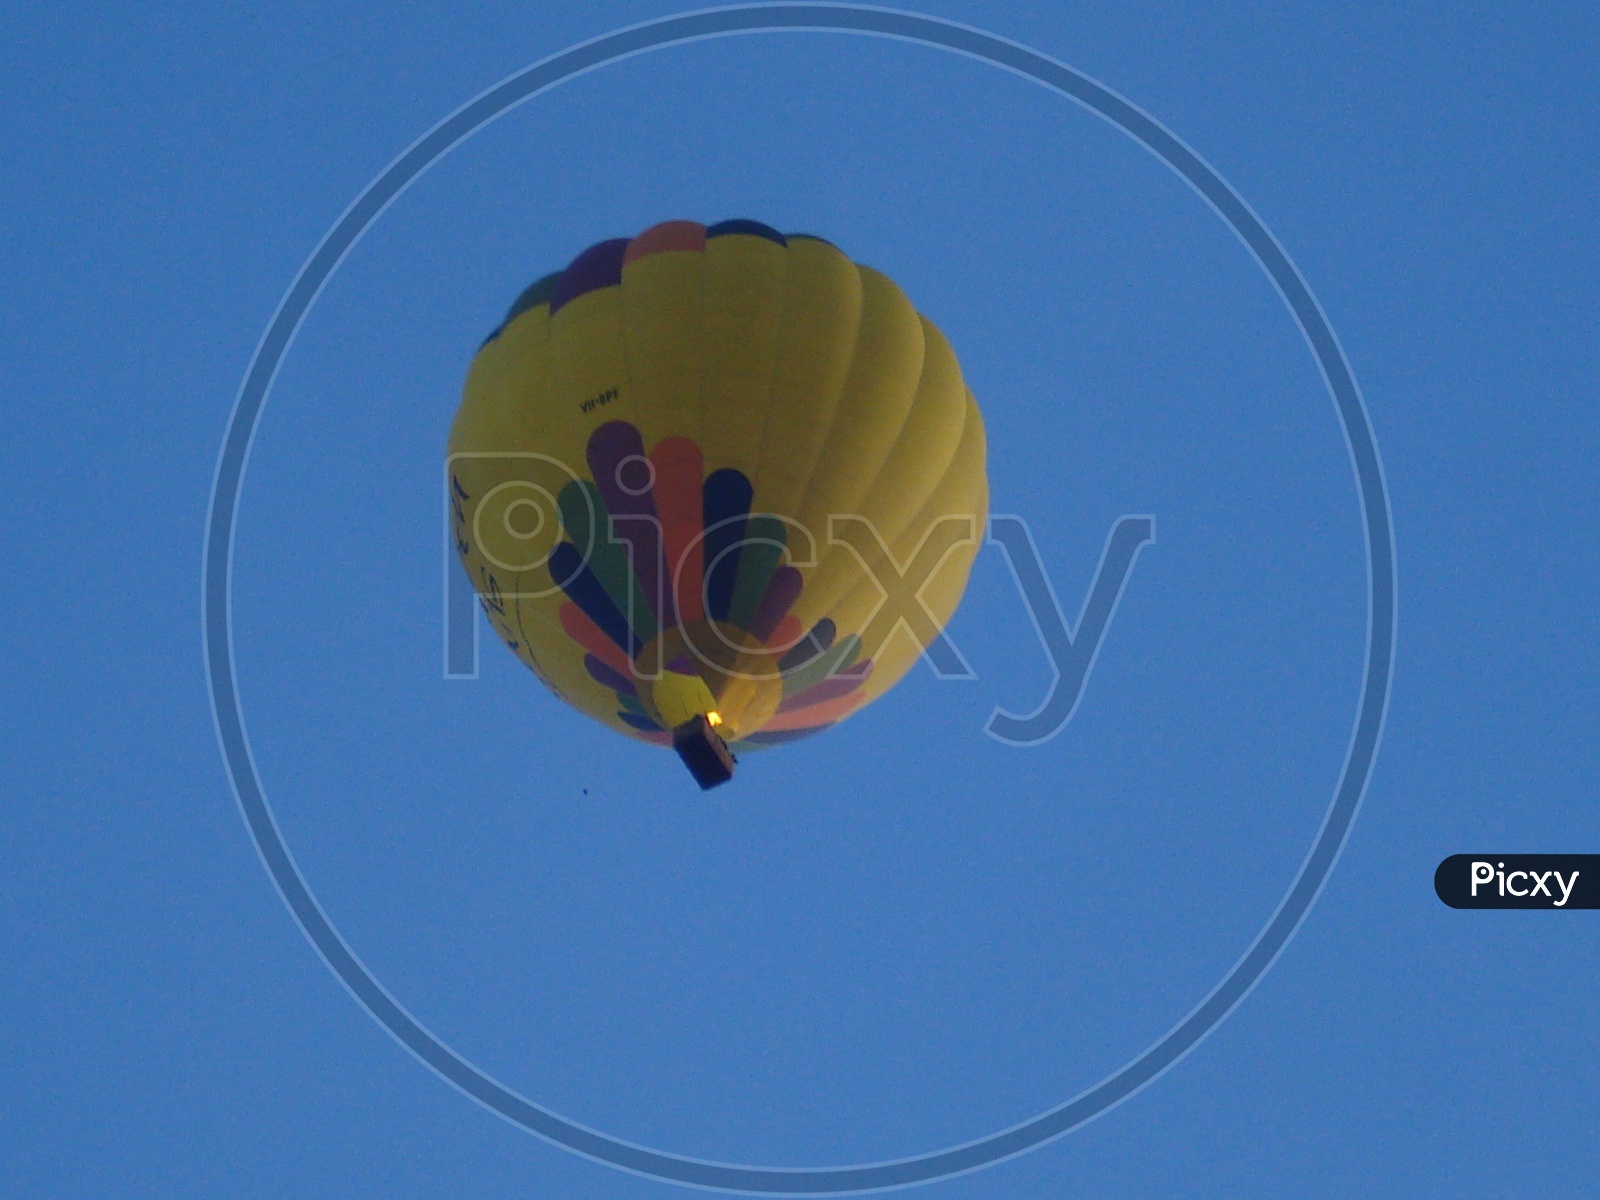 Hot air balloon in flight